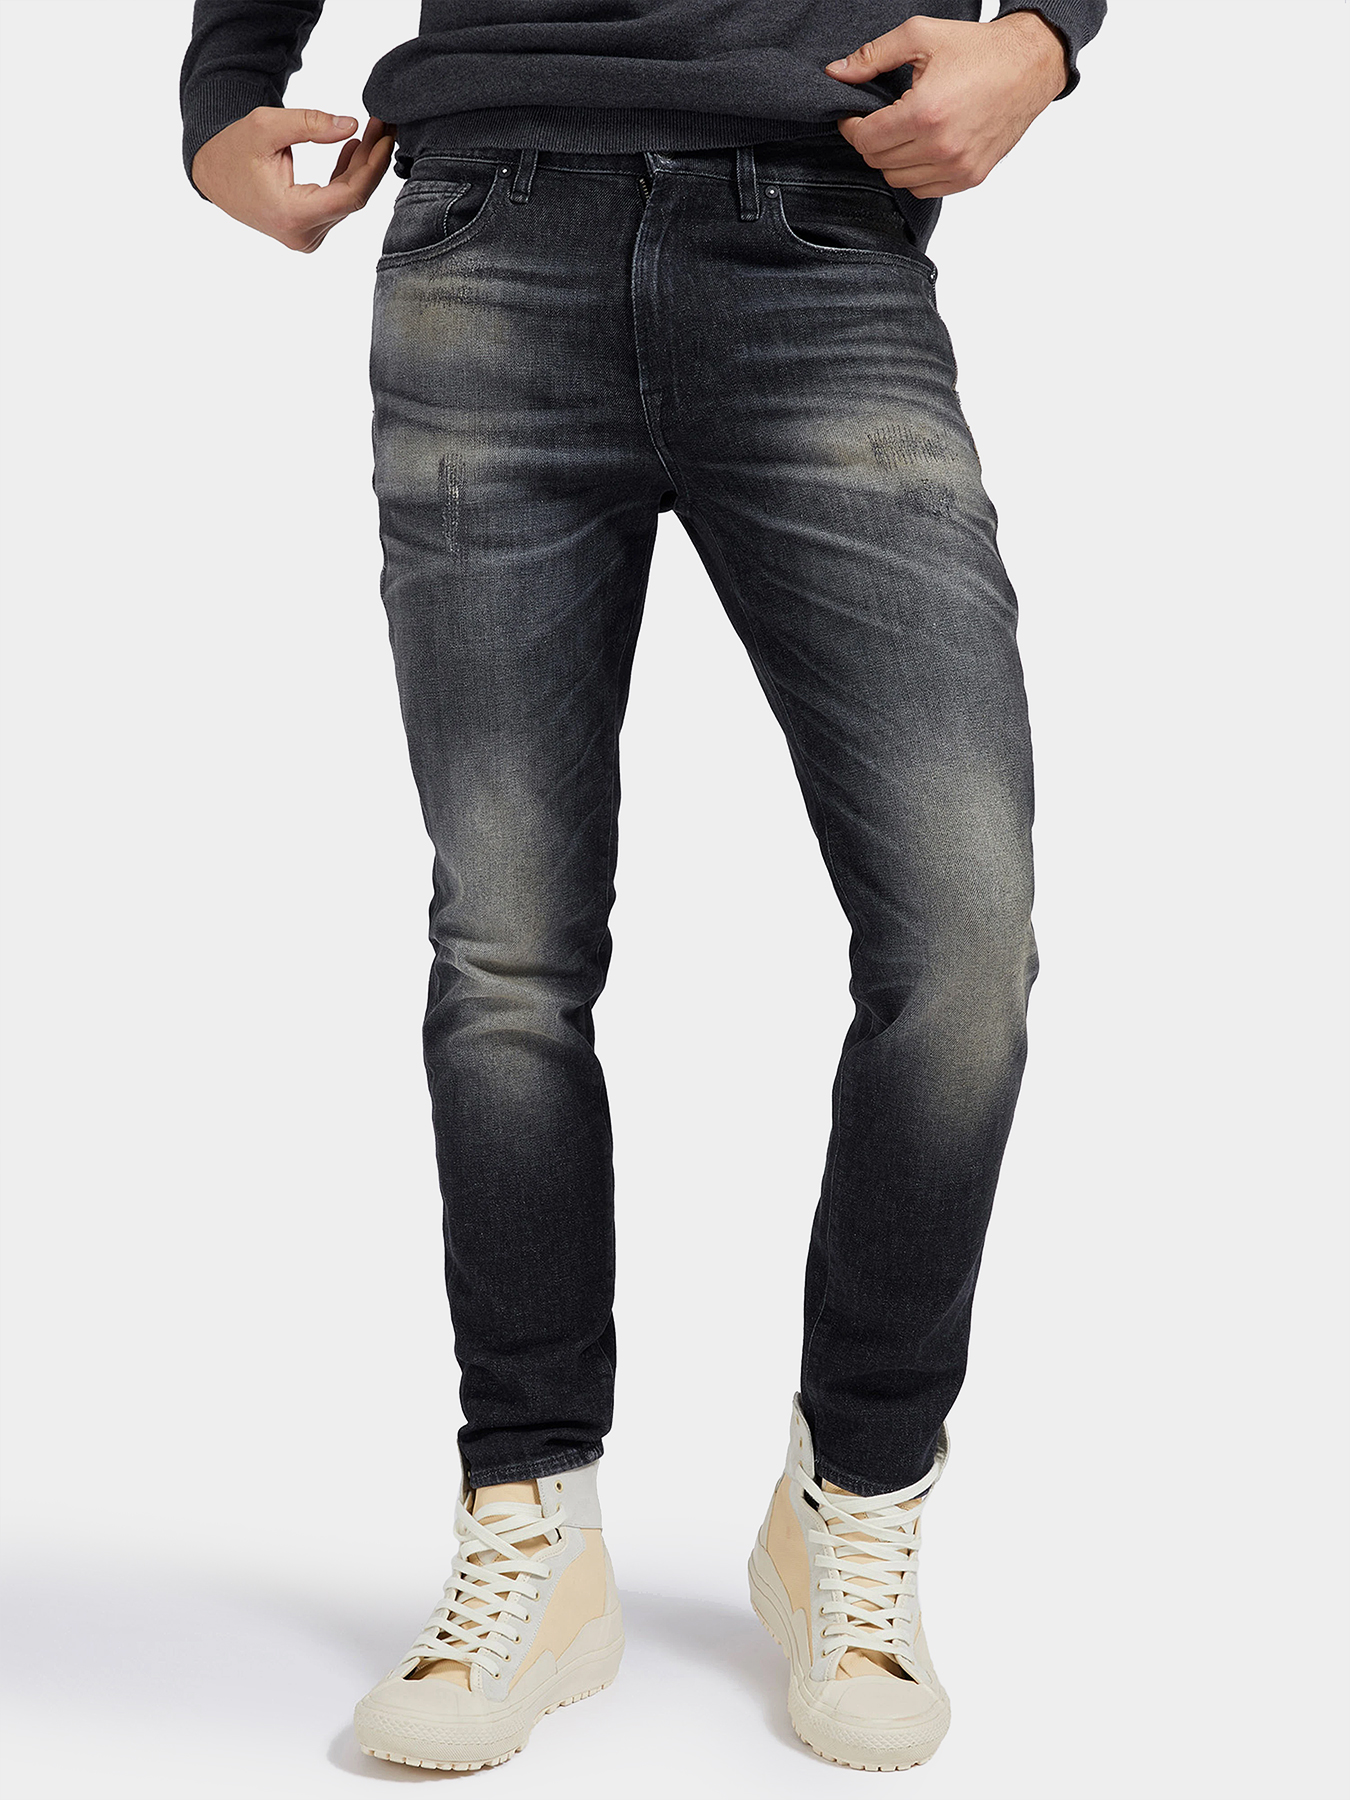 DRAKE Jeans in grey color brand GUESS — Globalbrandsstore.com/en